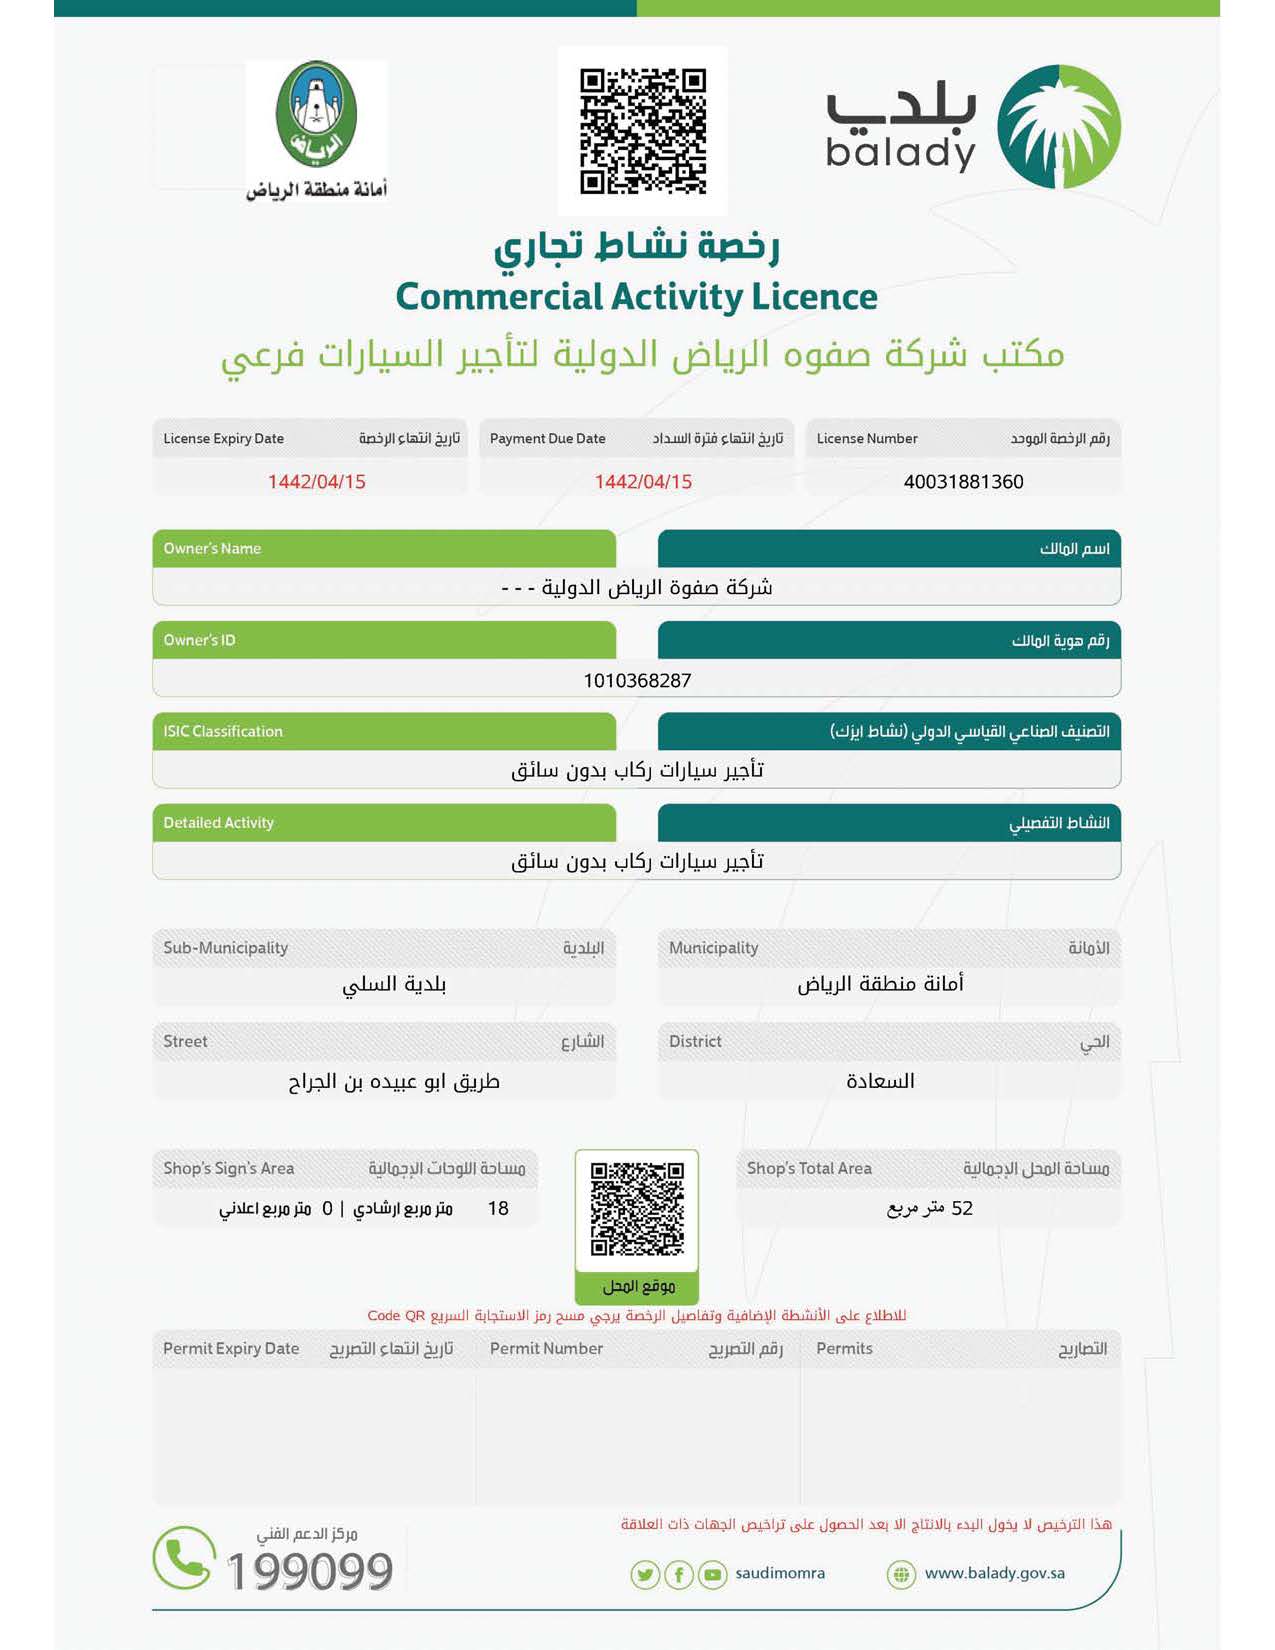 البلديات Page 13 One of the leading companies and a significant number in all its fields